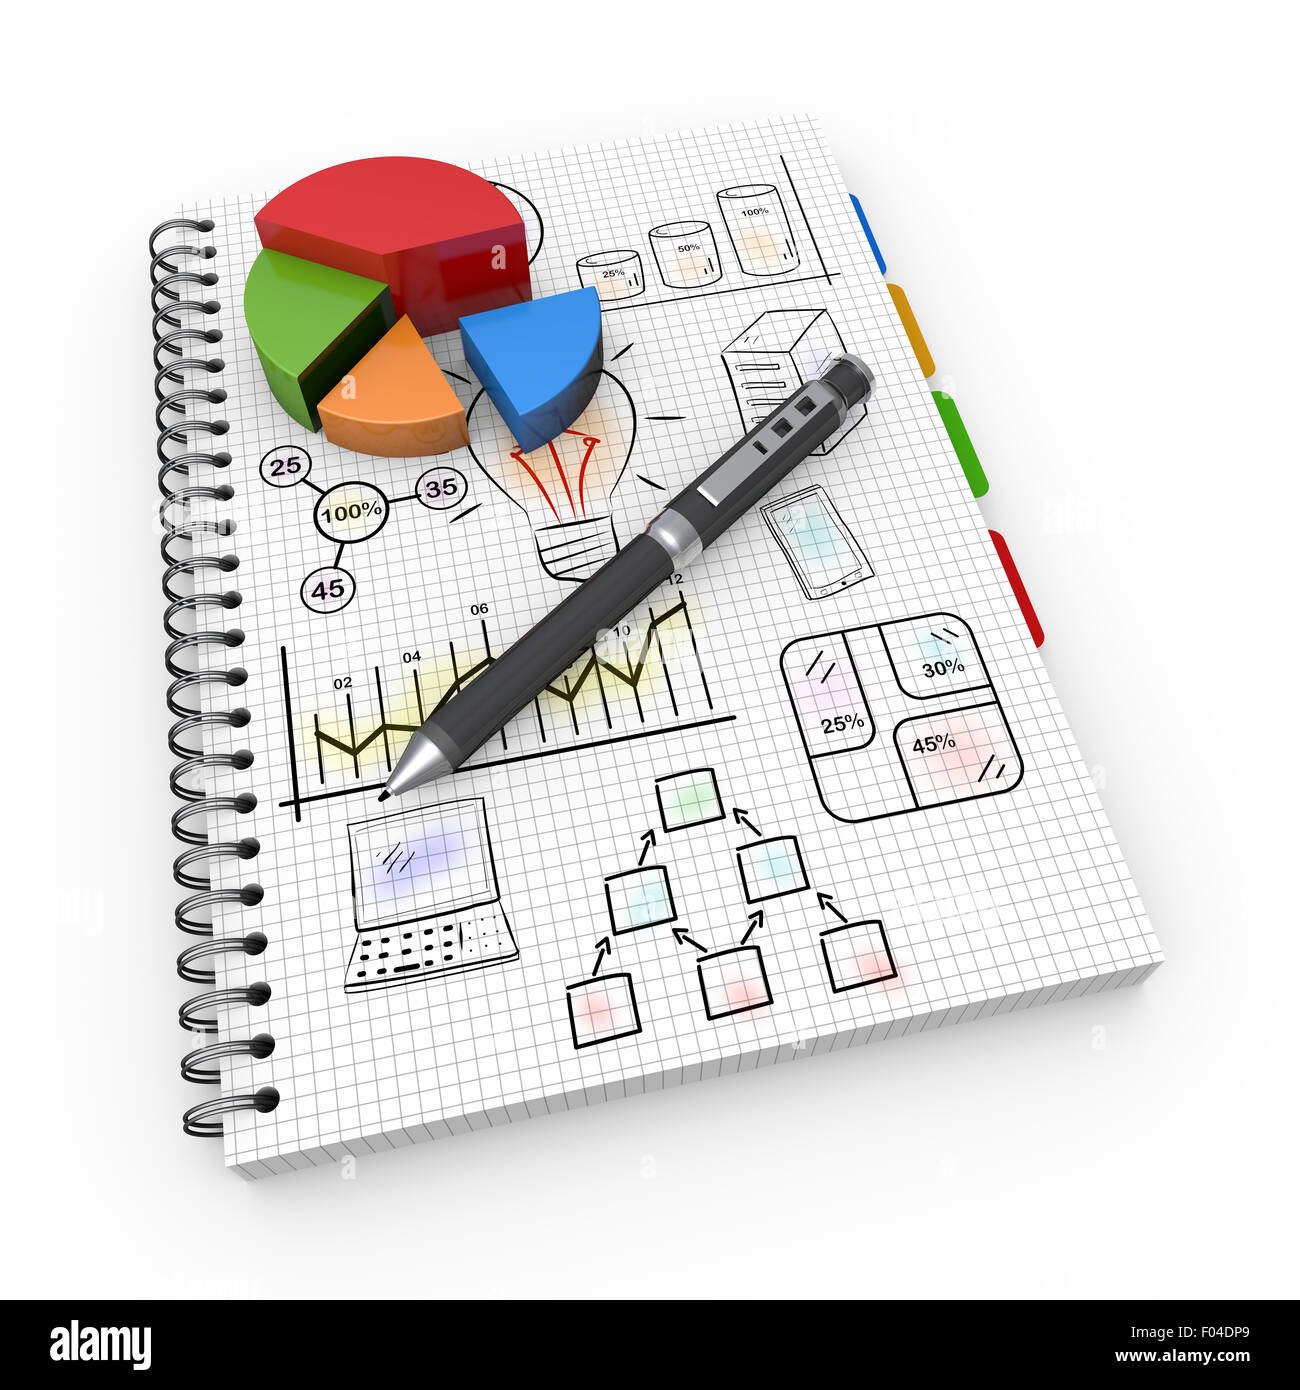 Ideas concept illustration design over a notebook Stock Photo